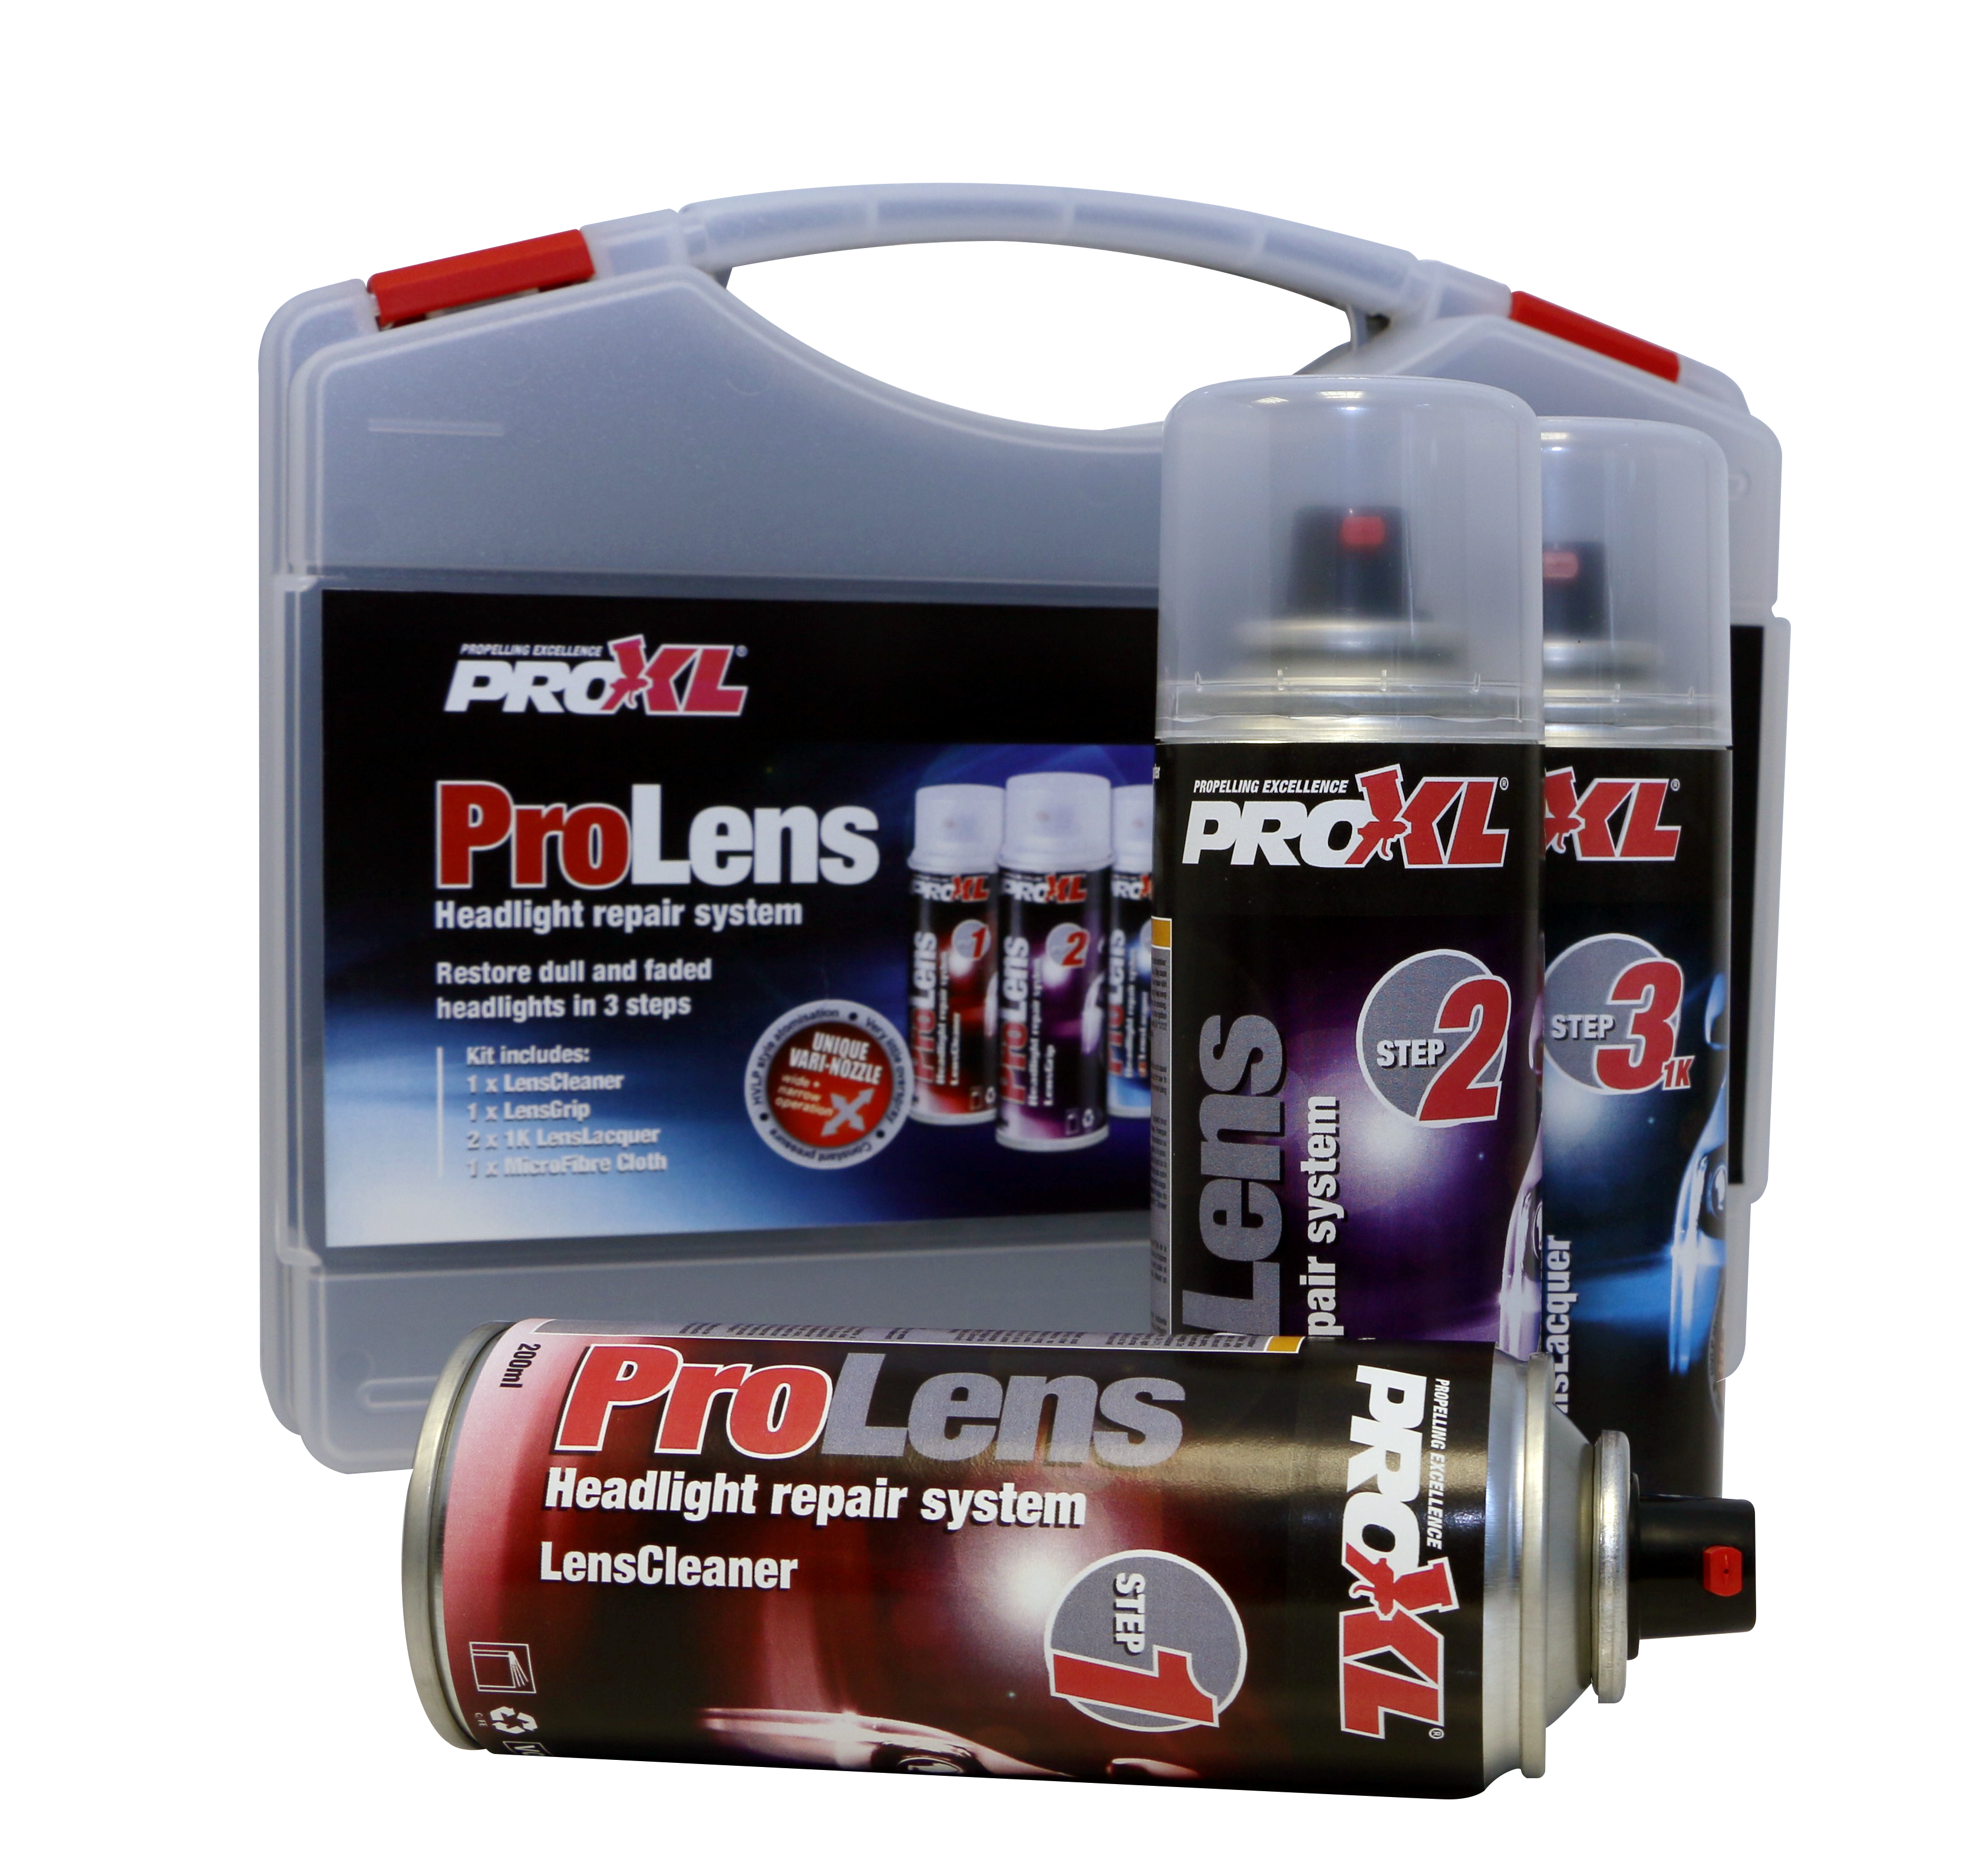 ProLens Headlight Repair Kit Product Image